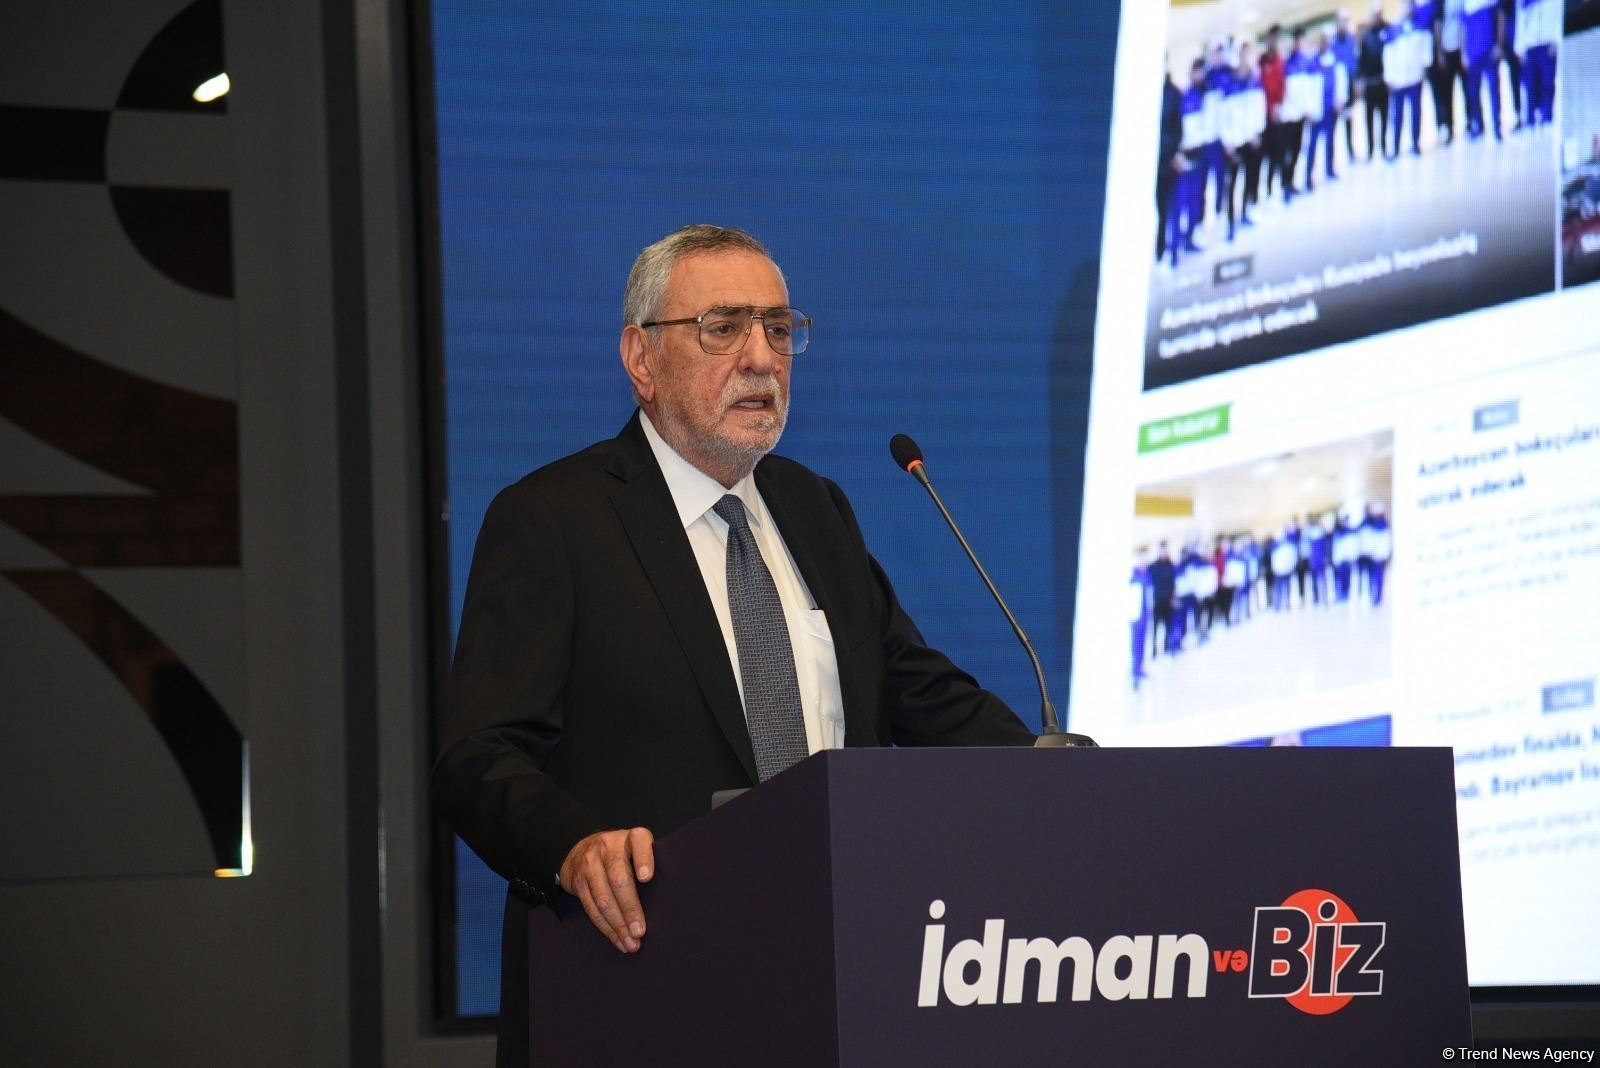 Project idman.biz to play vital role in Azerbaijan's media - National Olympic Committee VP